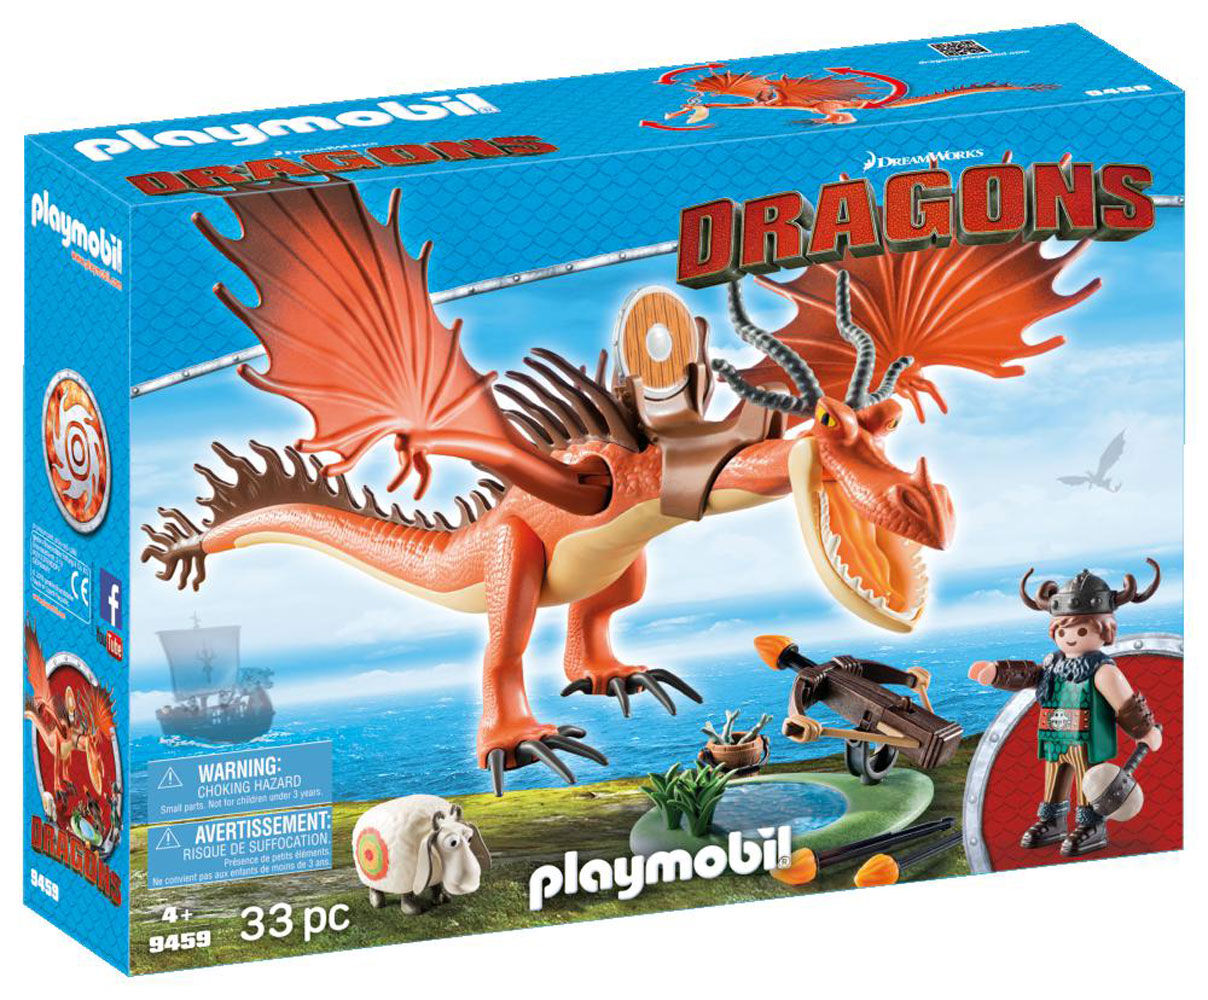 train your dragon playmobil